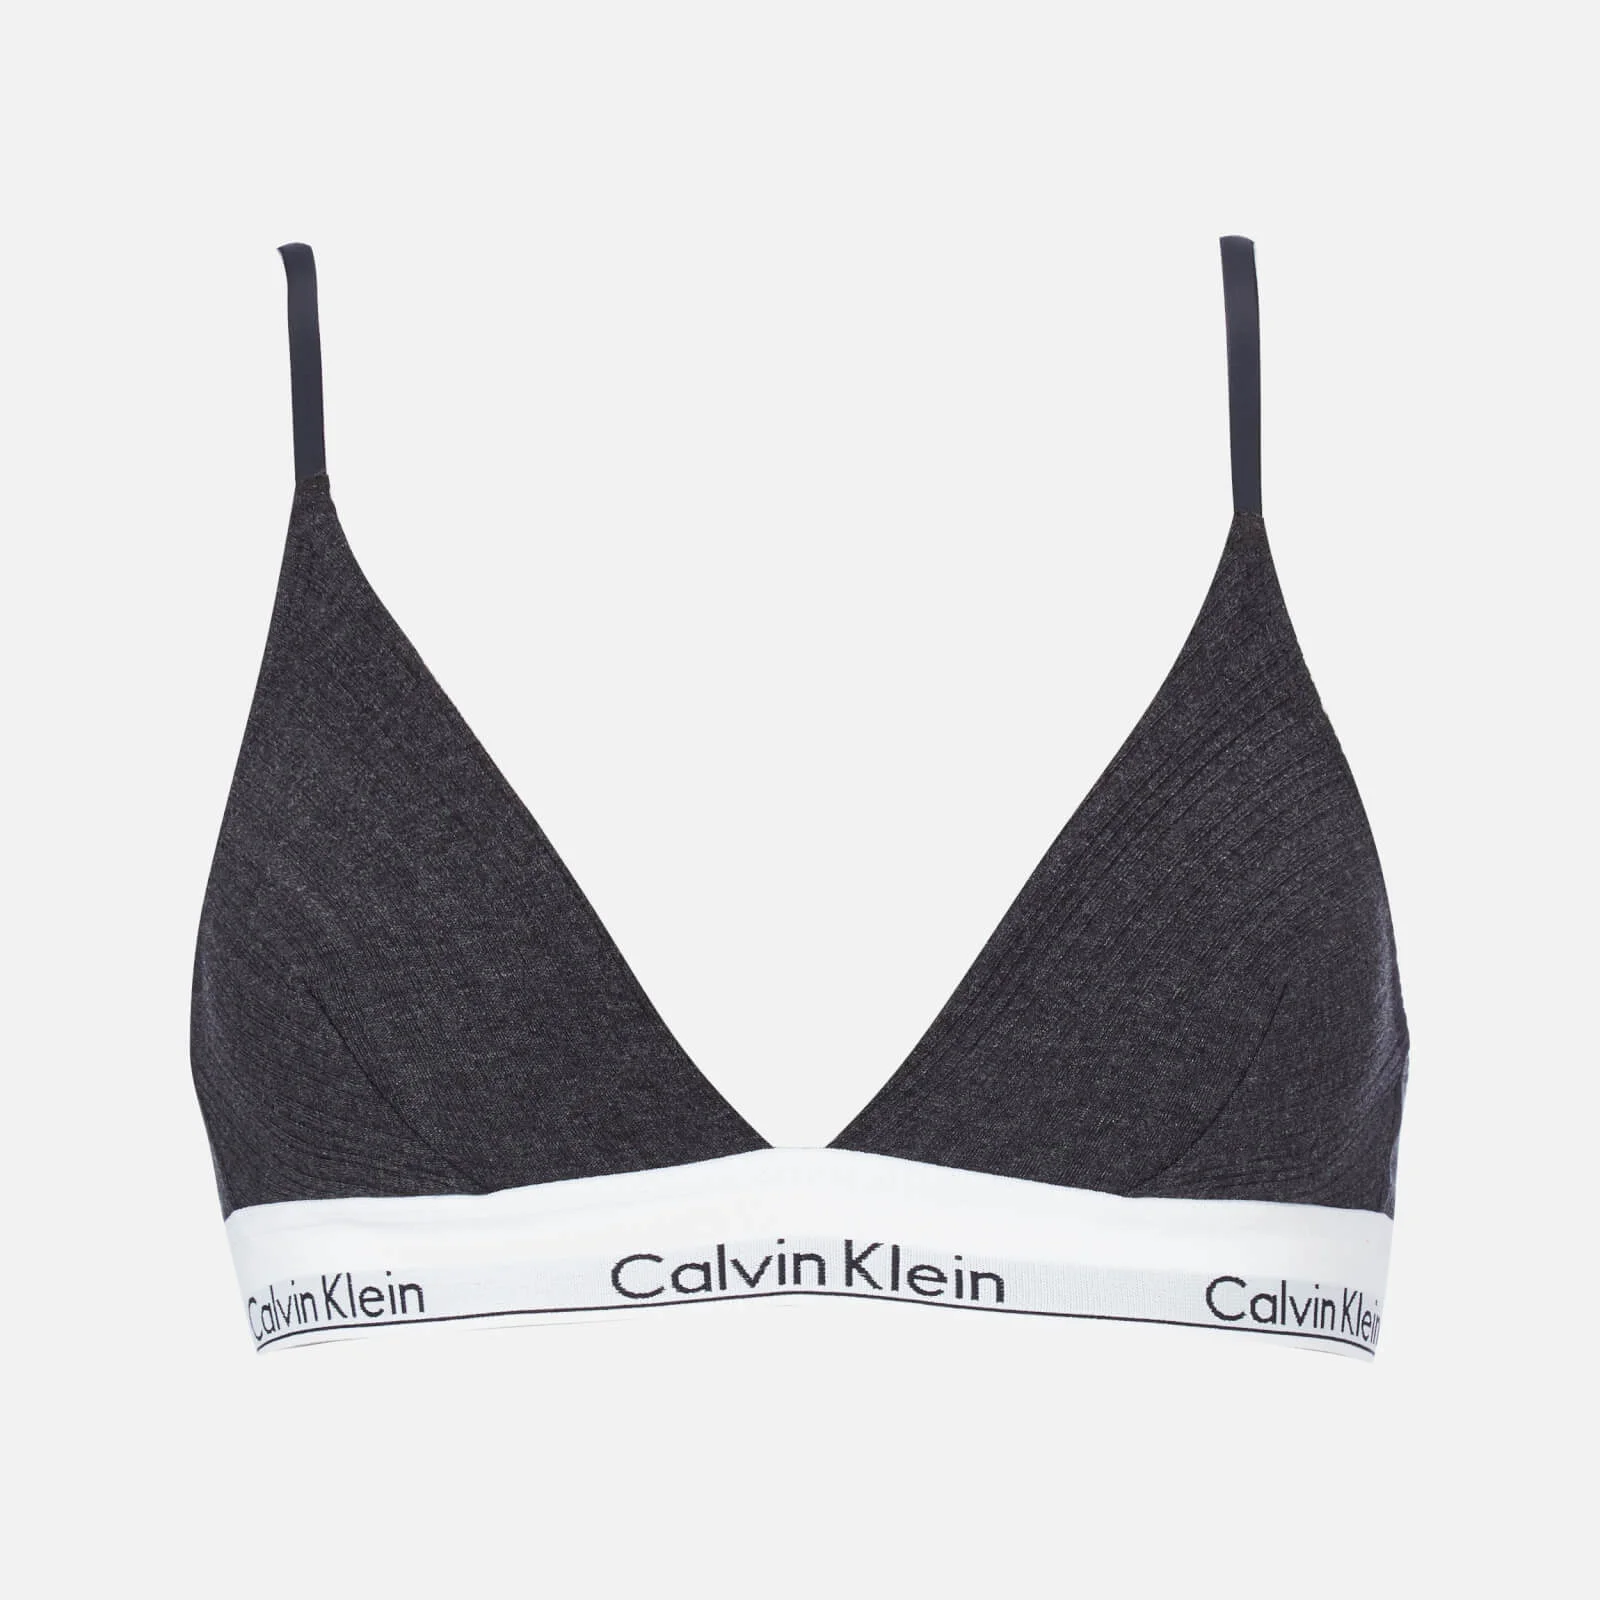 Calvin Klein Women's Triangle CK Logo Bra - Rib Knit/Charcoal Heather Image 1